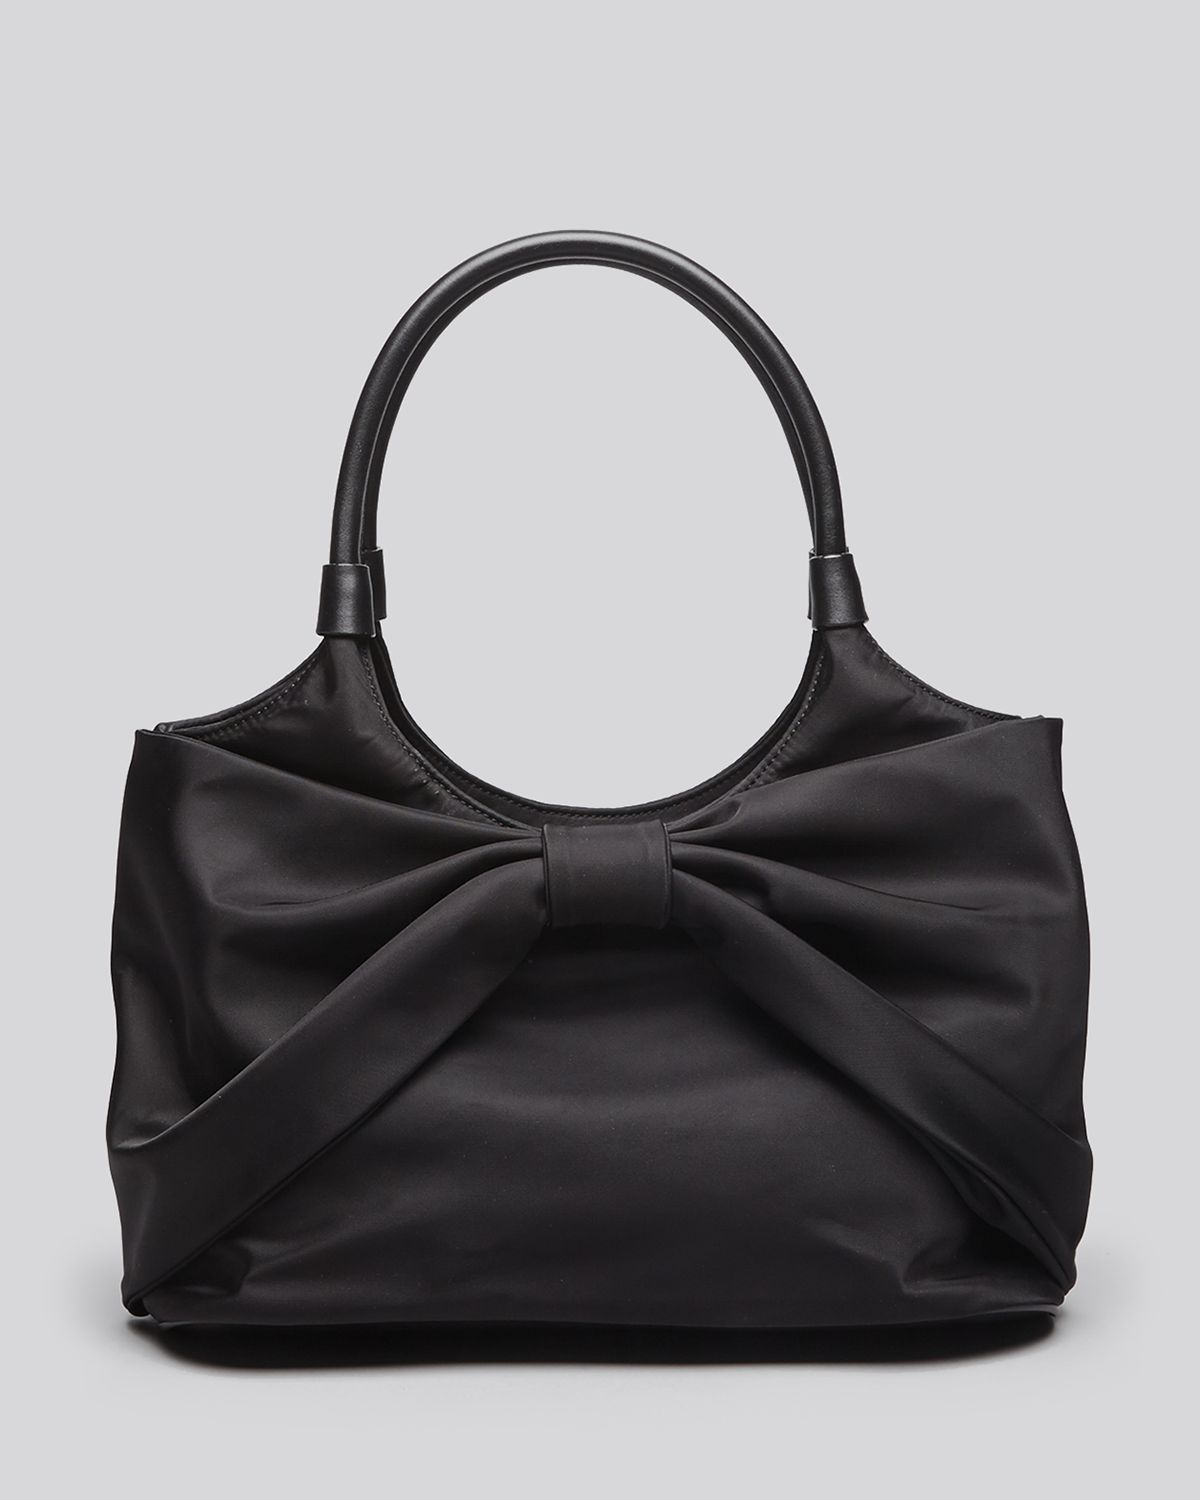 Lyst - Kate Spade New York Shoulder Bag Seaside Nylon Sutton Bow in Black